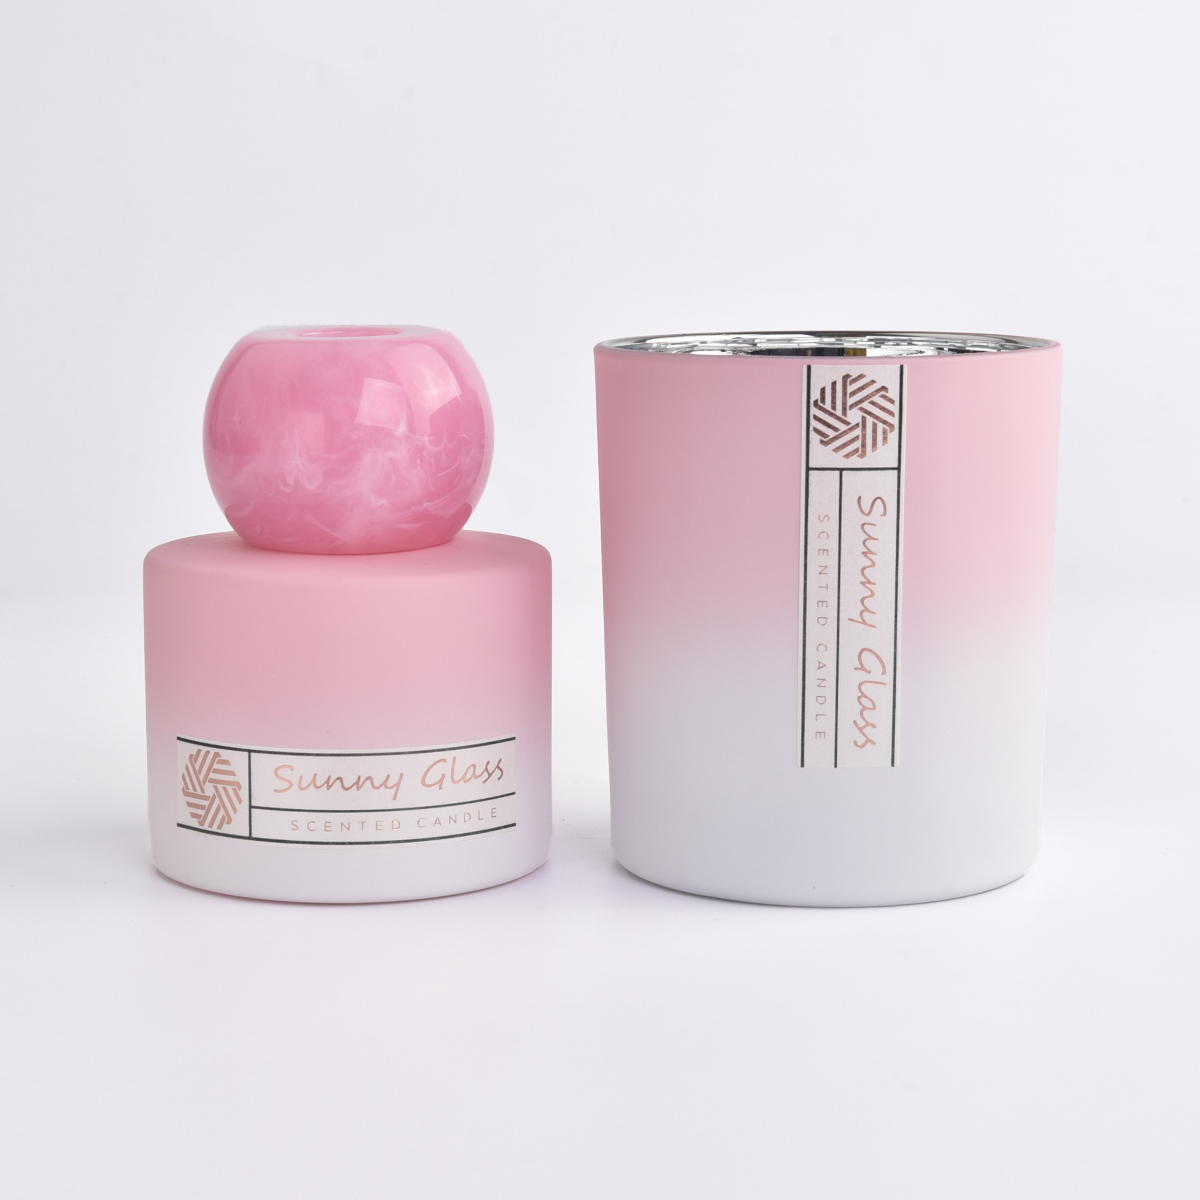 Pemegang lilin kaca merah jambu beransur -ansur dengan hadiah botol penyebar aromaterapi aromaterapi